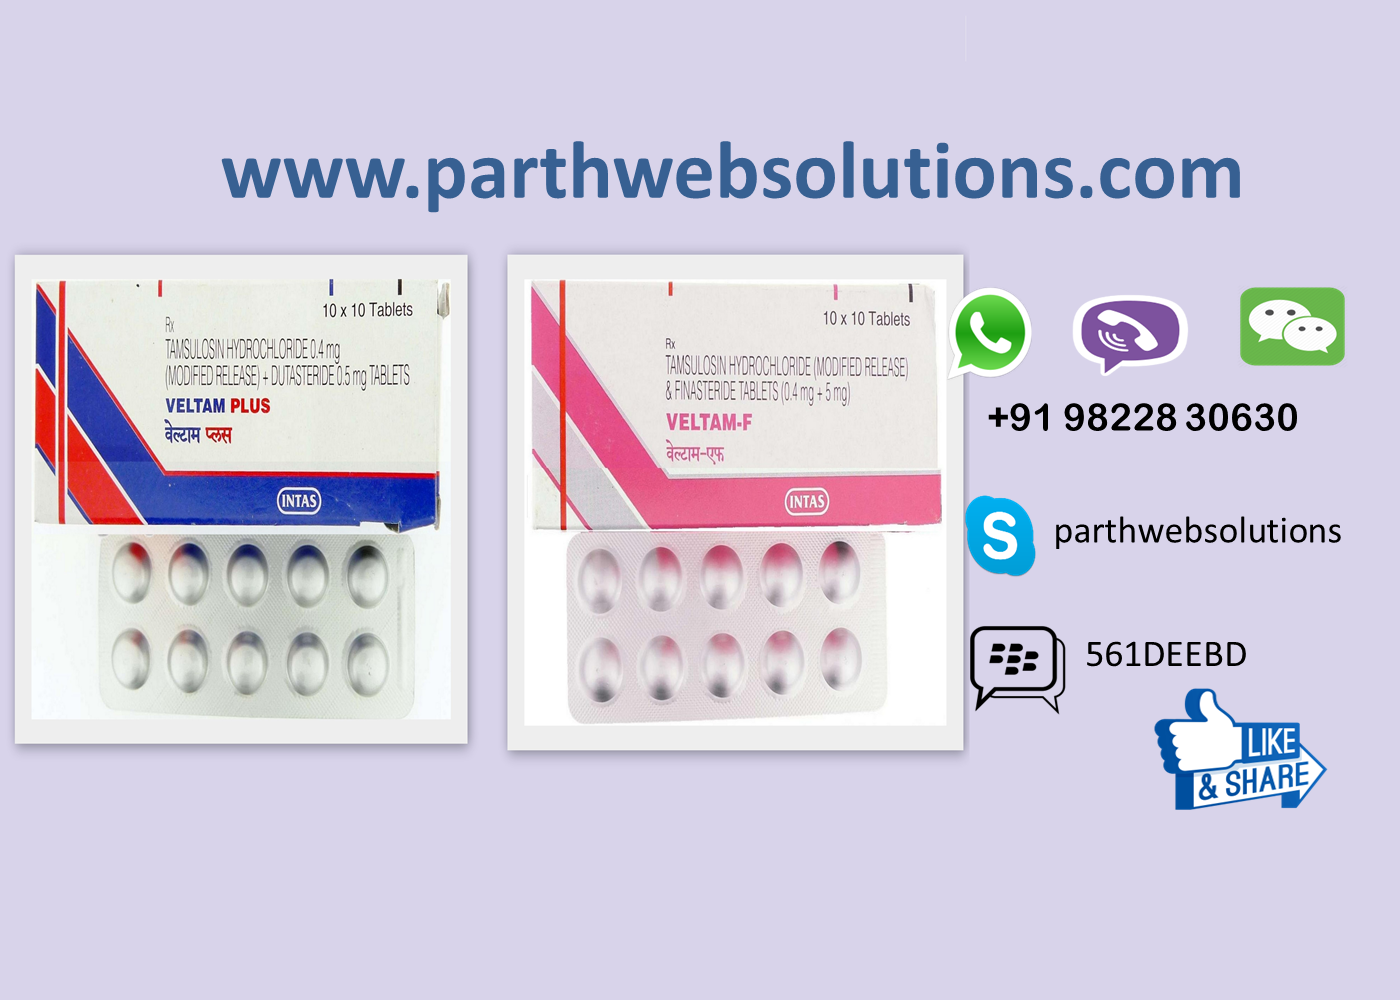 parthweb solutions/Сompanies